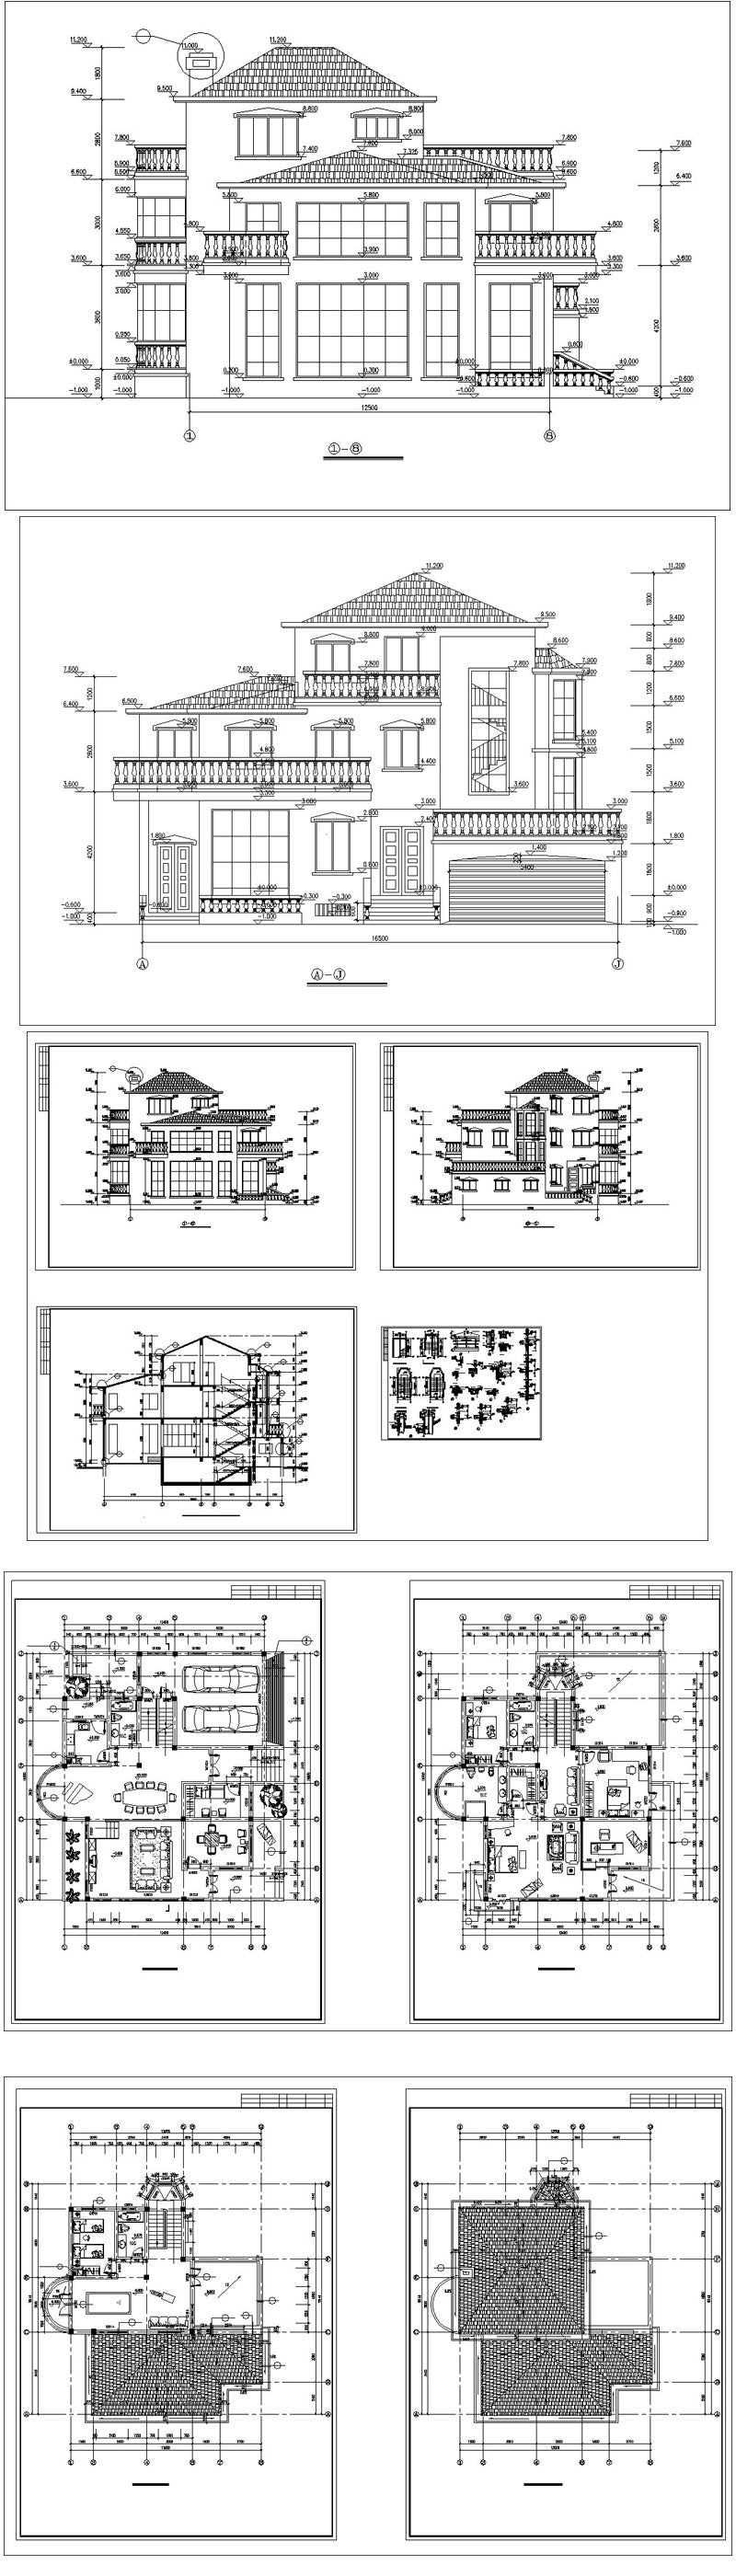 ★【Villa CAD Design,Details Project V.12】Chateau,Manor,Mansion,Villa@Autocad Blocks,Drawings,CAD Details,Elevation